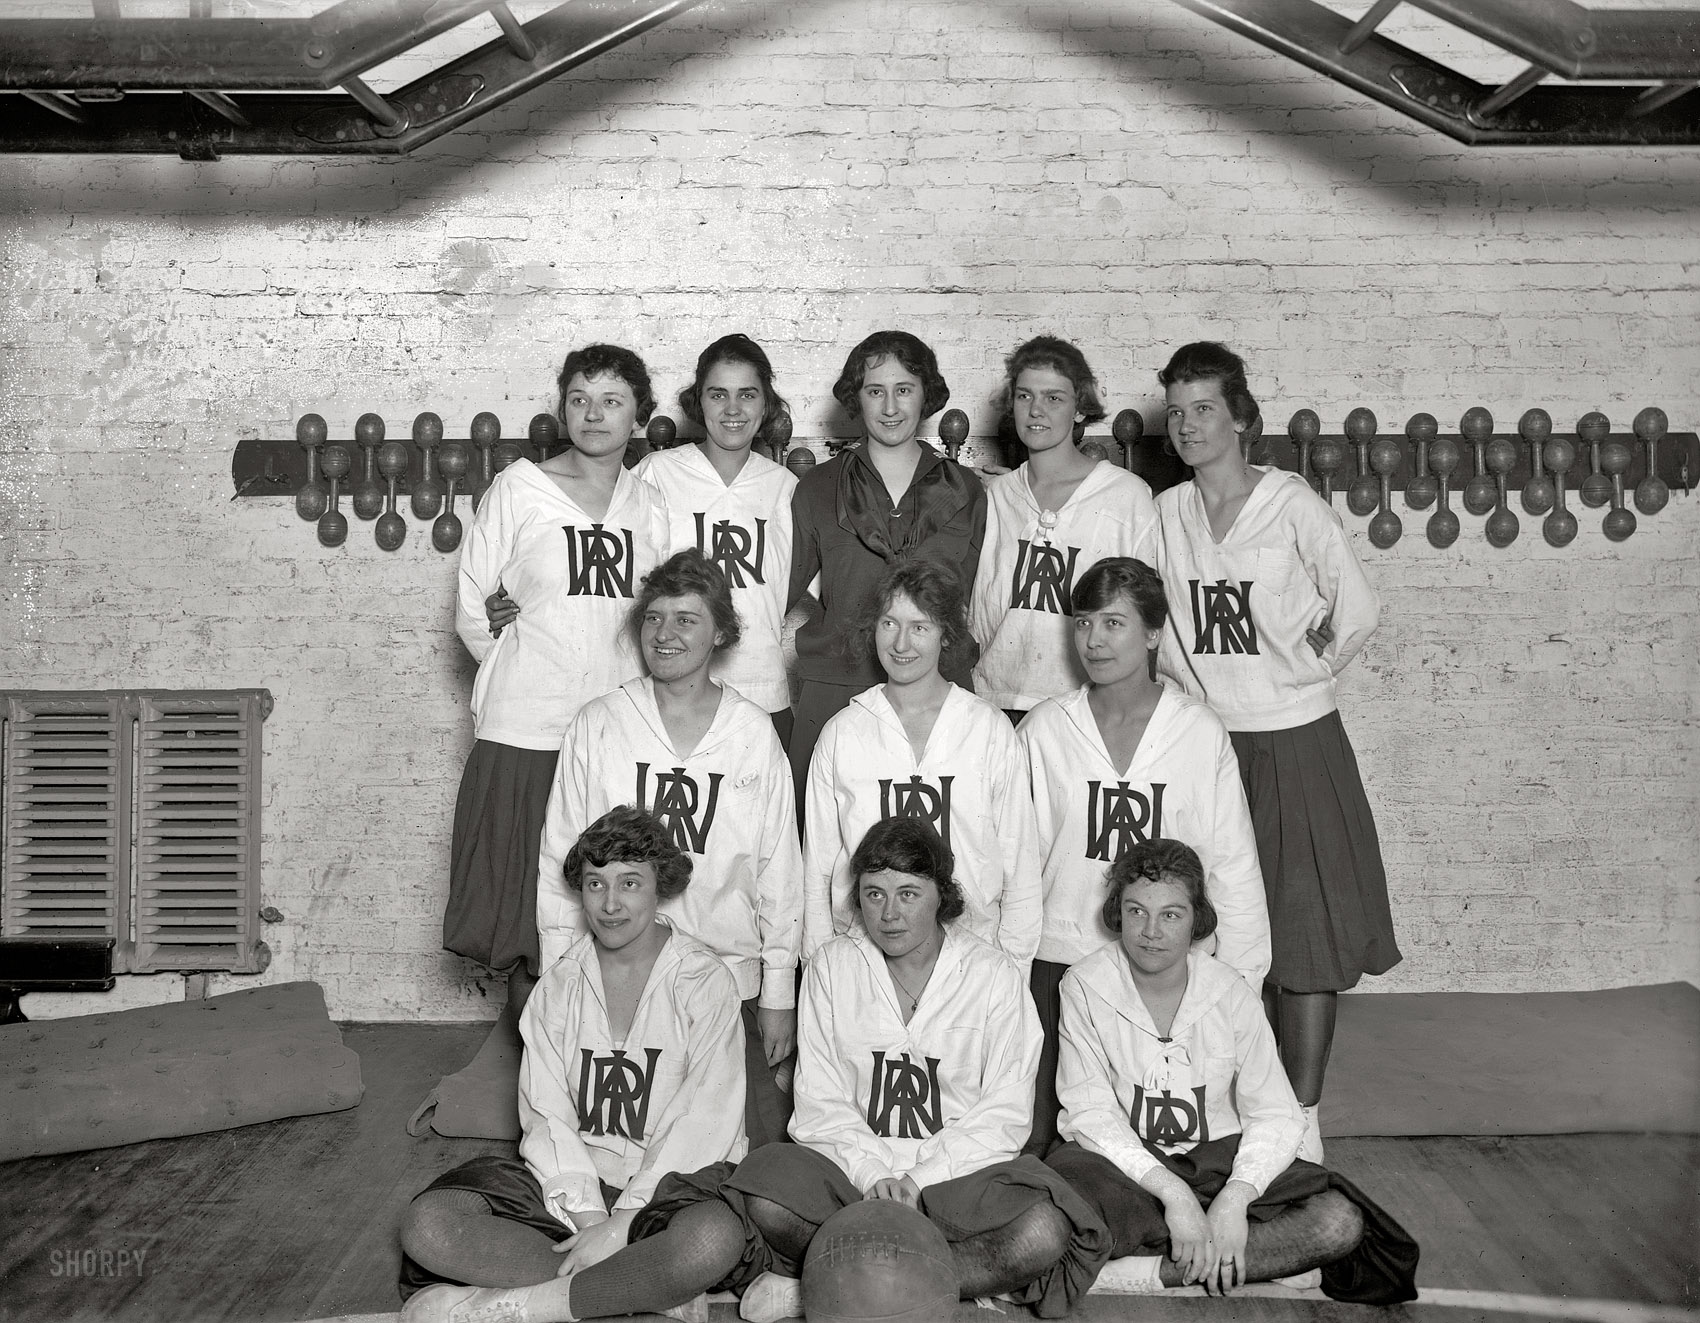 Washington circa 1919. "War Risk basketball team." National Photo Company Collection glass negative. View full size.